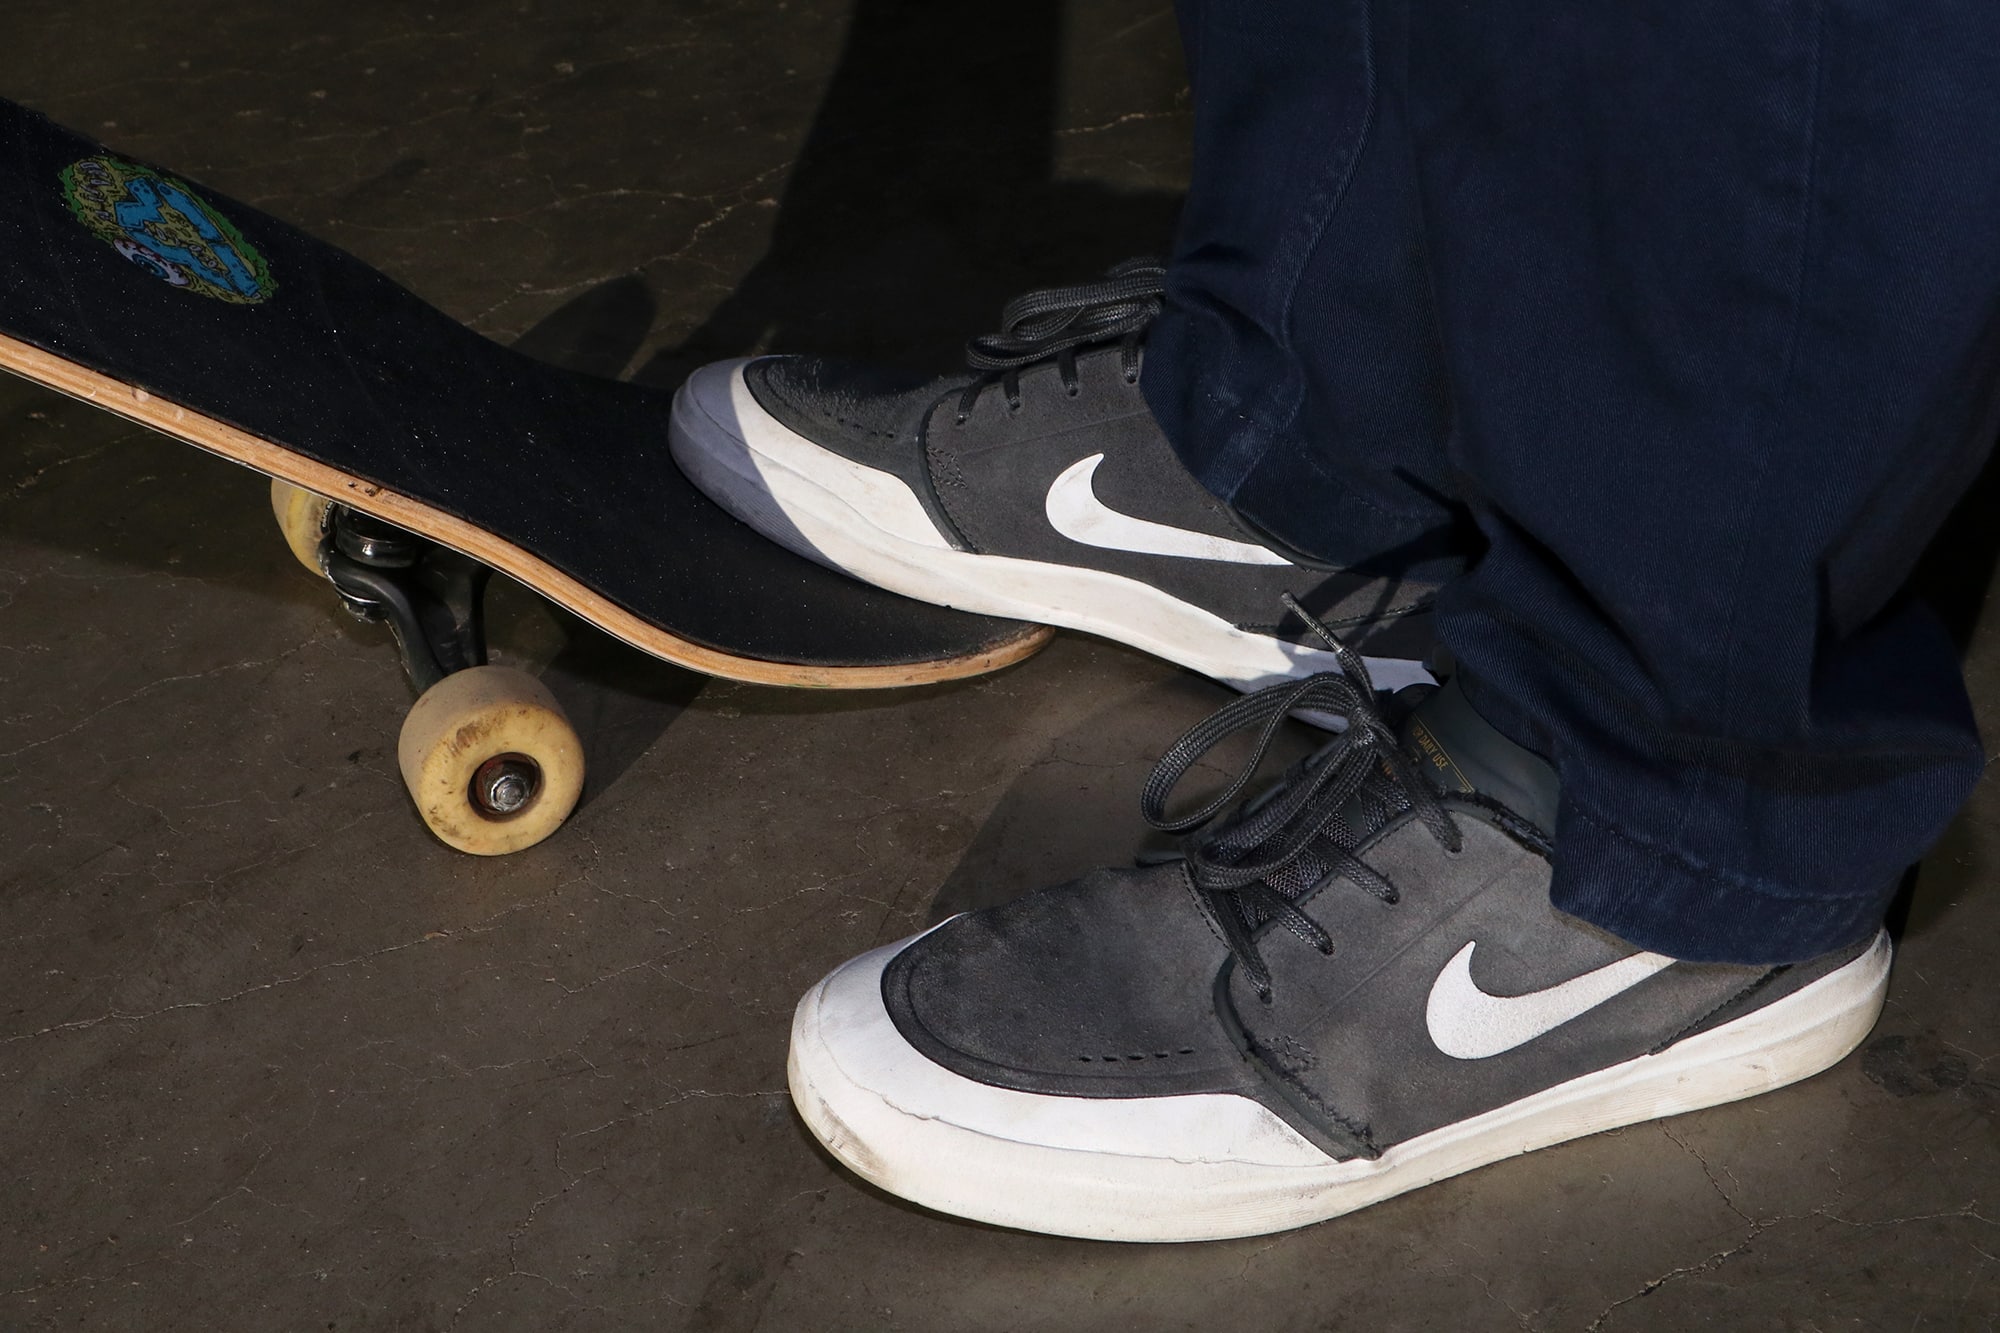 Nike SB Janoski Hyperfeel XT Skate Shoes Wear Test Review | Tactics